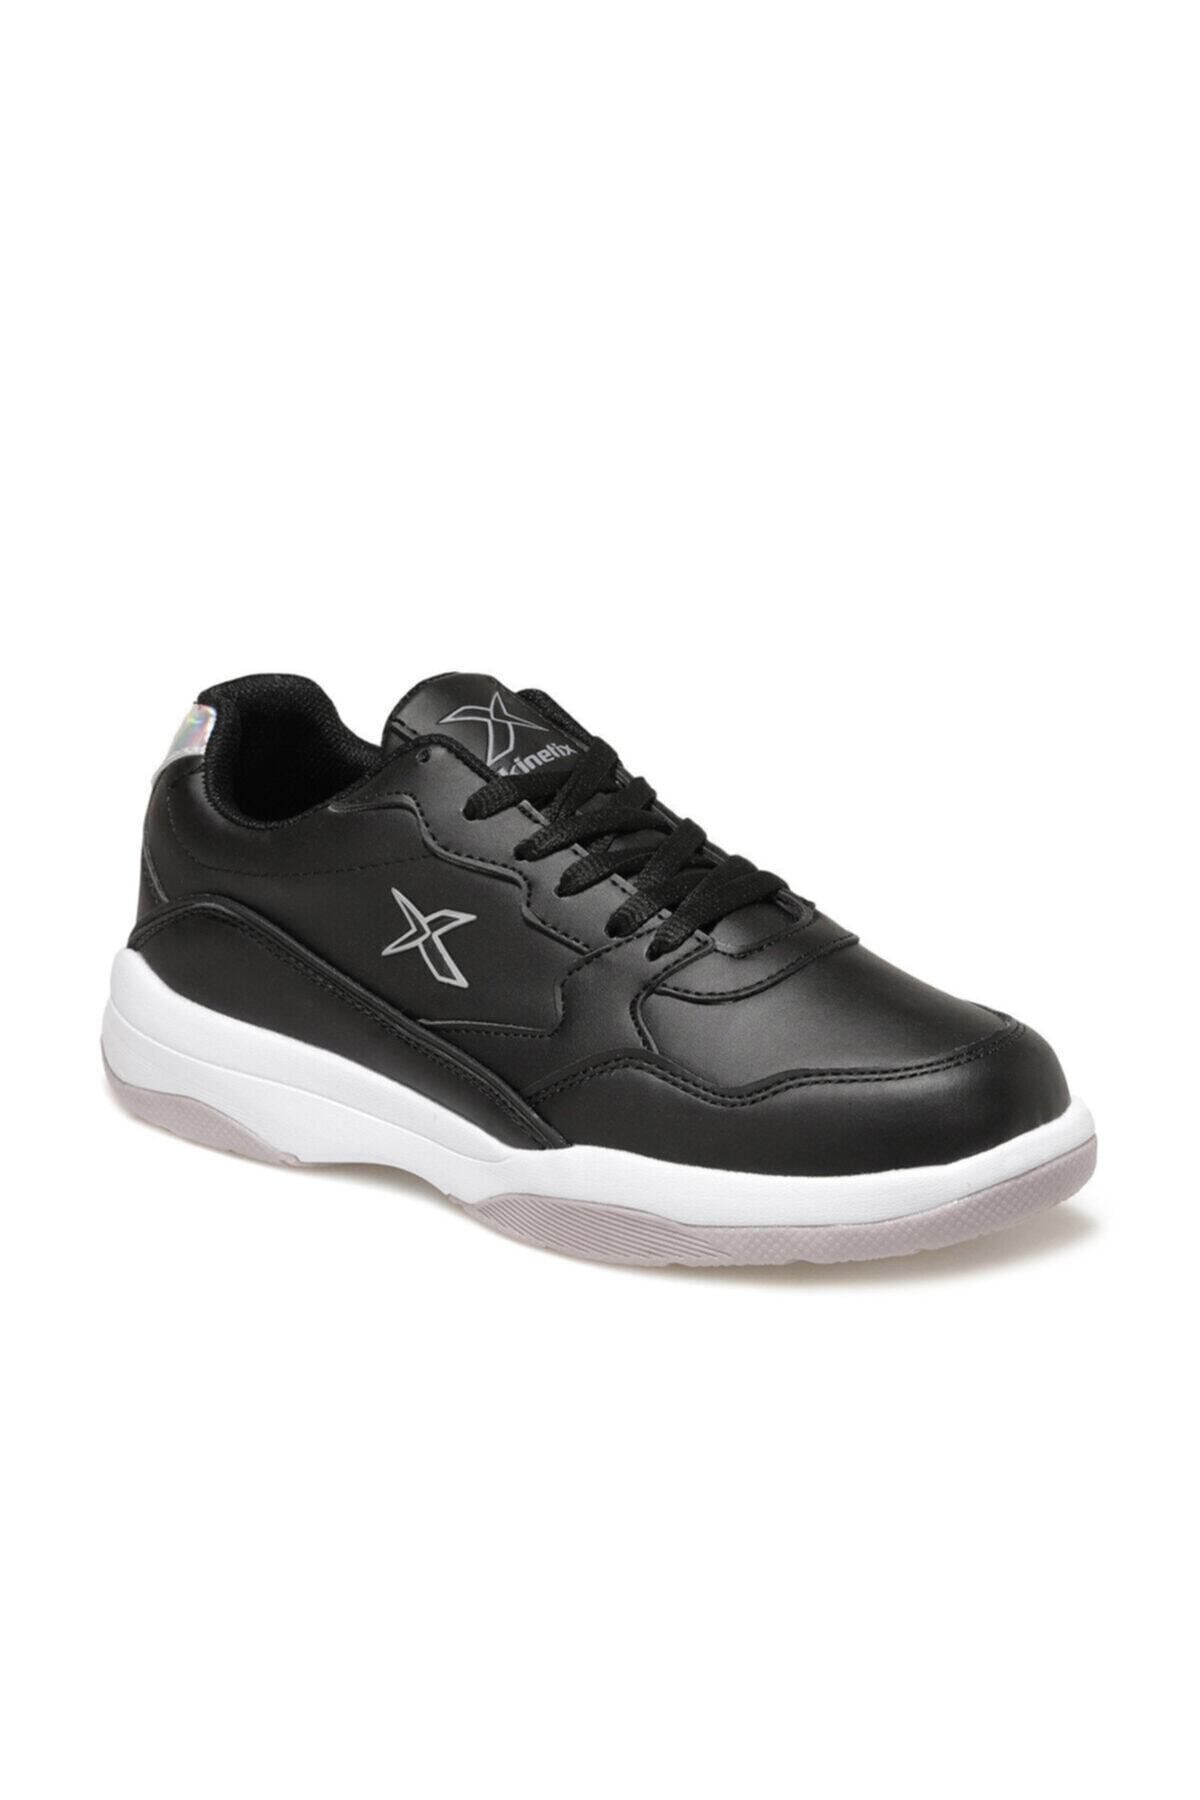 Kinetix SHIRA W Siyah Kadın Sneaker Ayakkabı 100544503